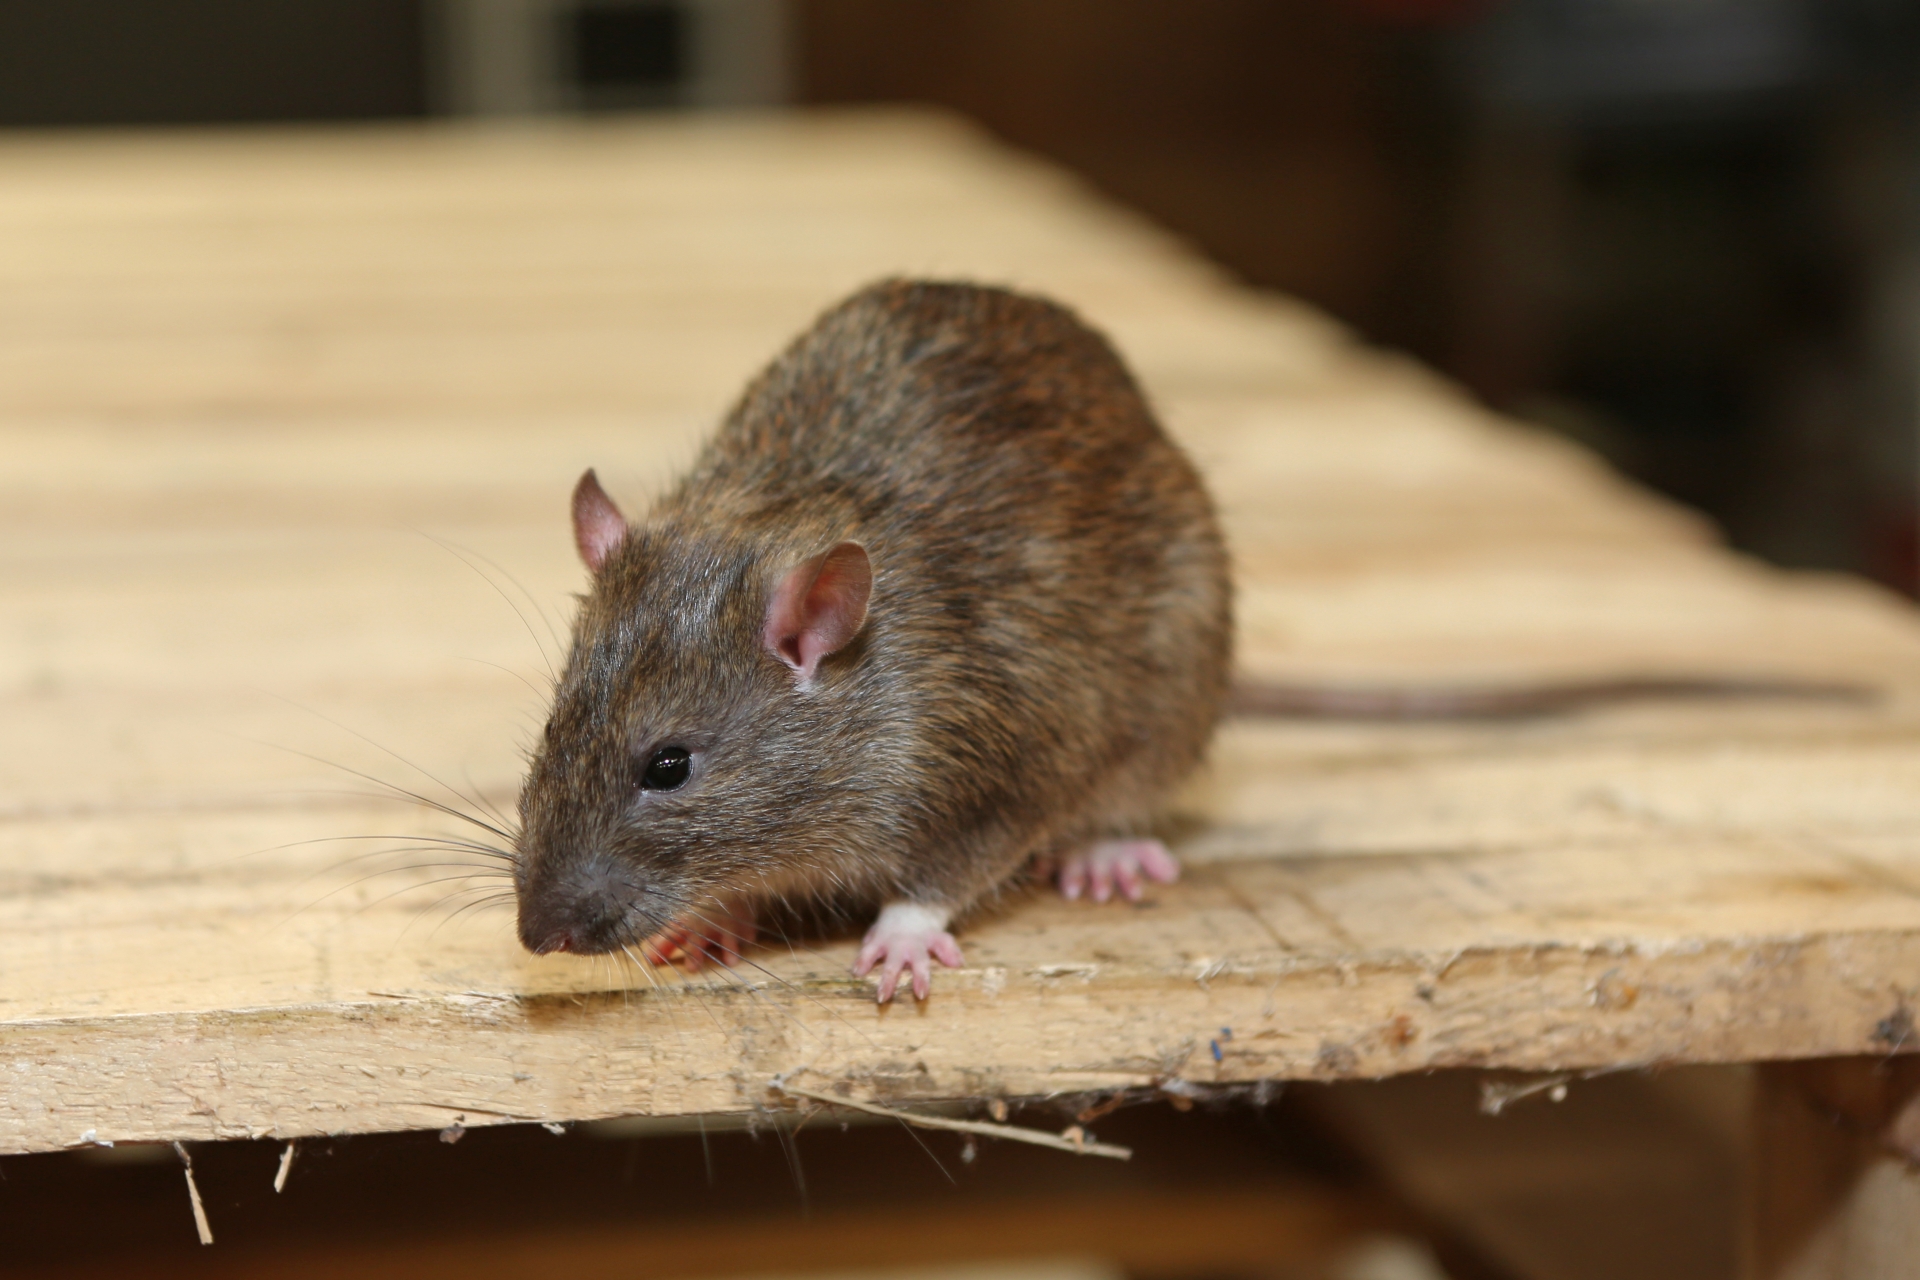 Rat extermination, Pest Control in Richmond, TW9, TW10. Call Now 020 8166 9746